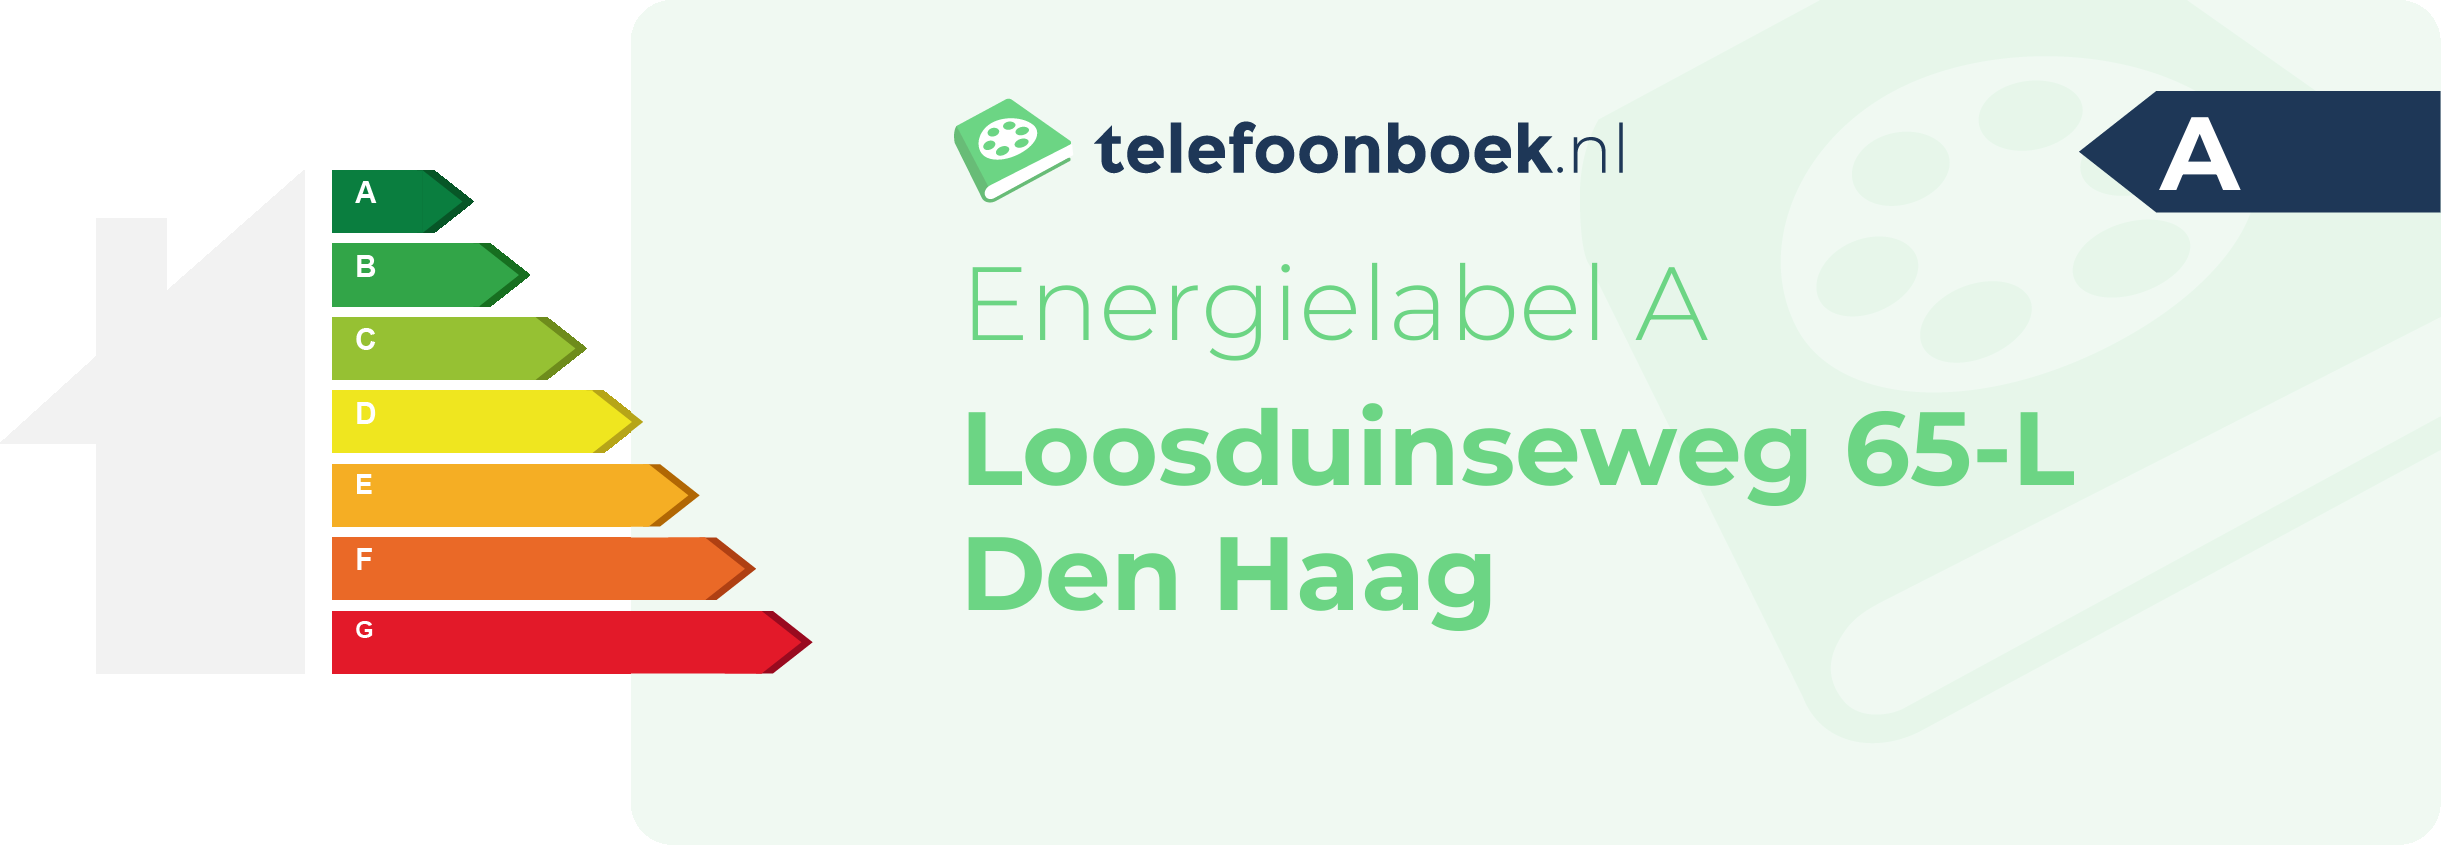 Energielabel Loosduinseweg 65-L Den Haag